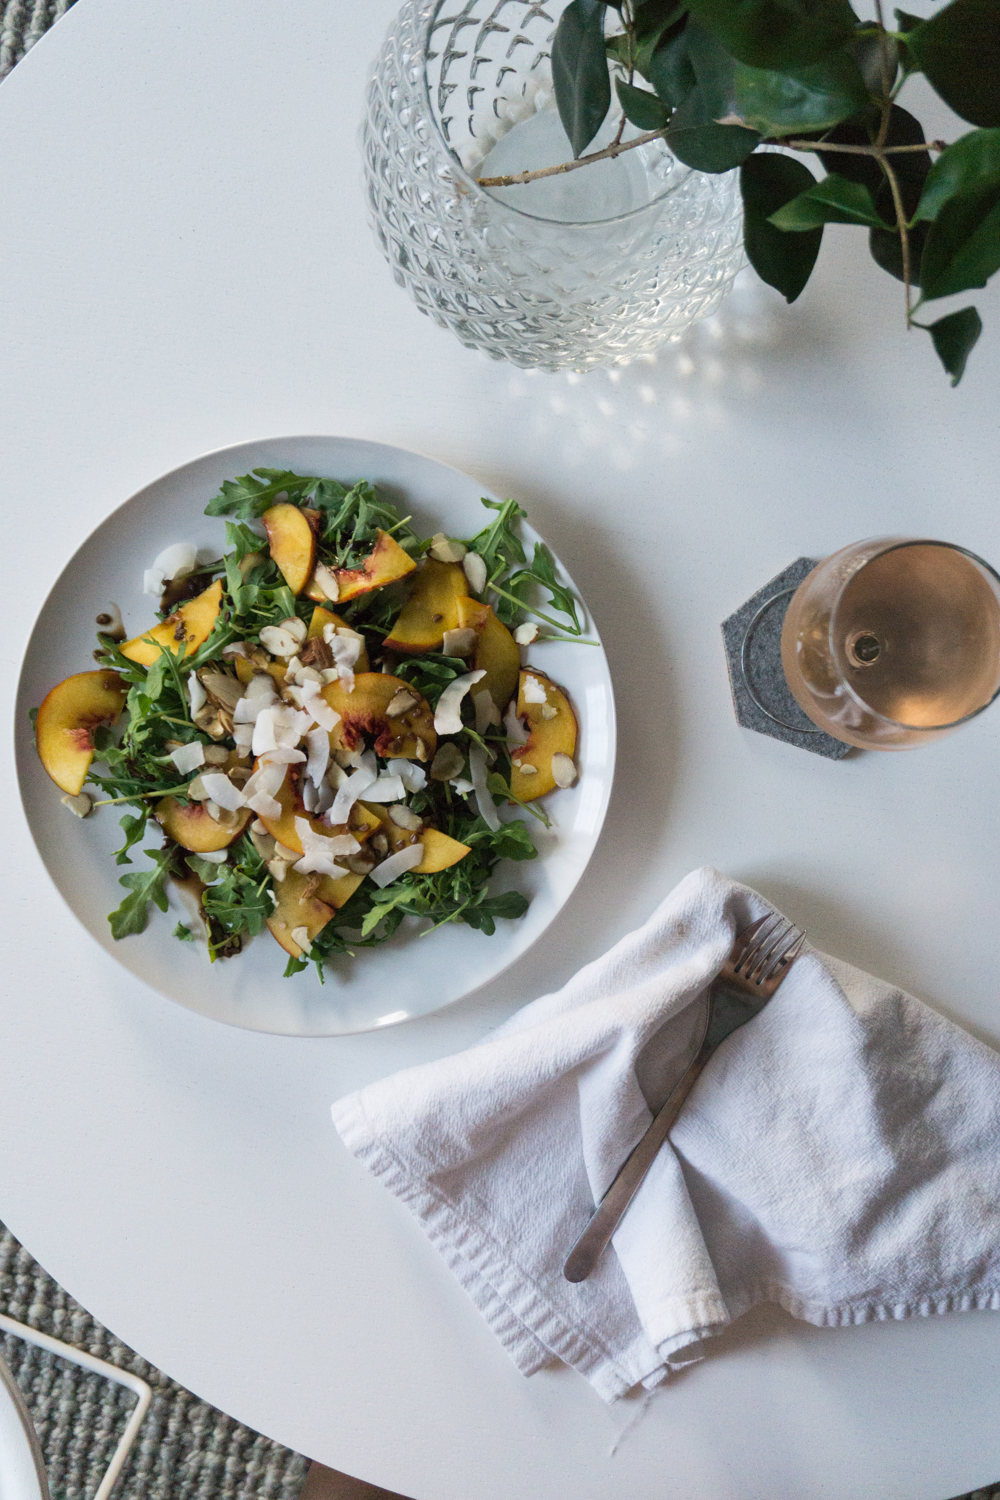 healthy salad recipies arugula fruit diet weight loss tips rgdaily blog